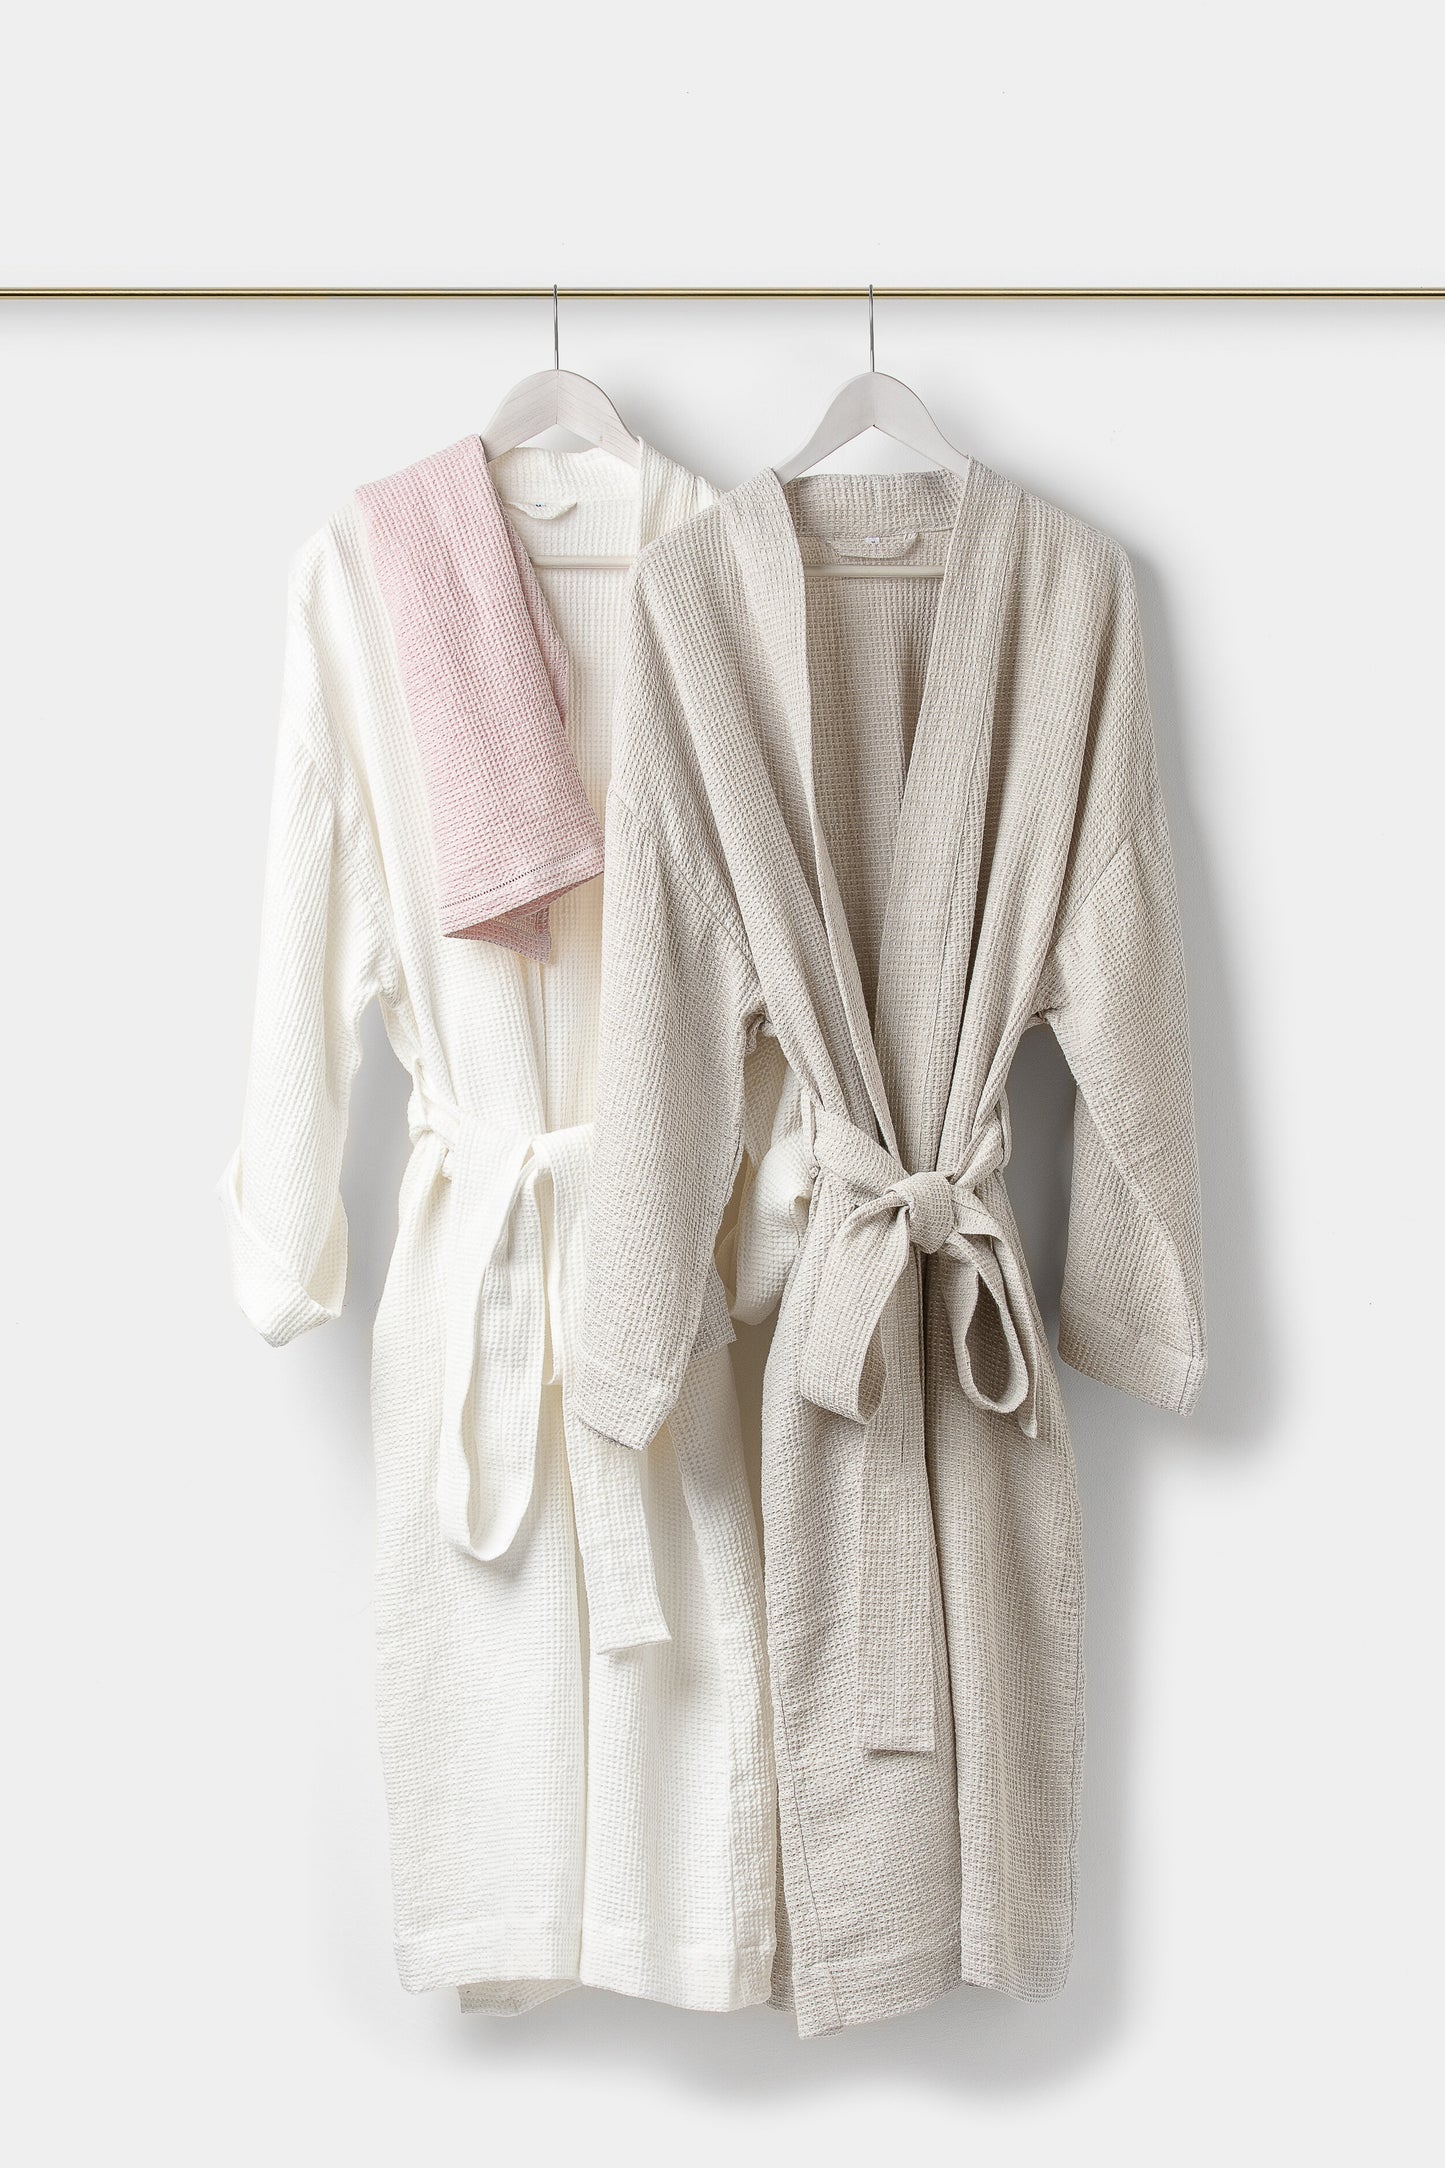 "Montecatini" bath robe in White